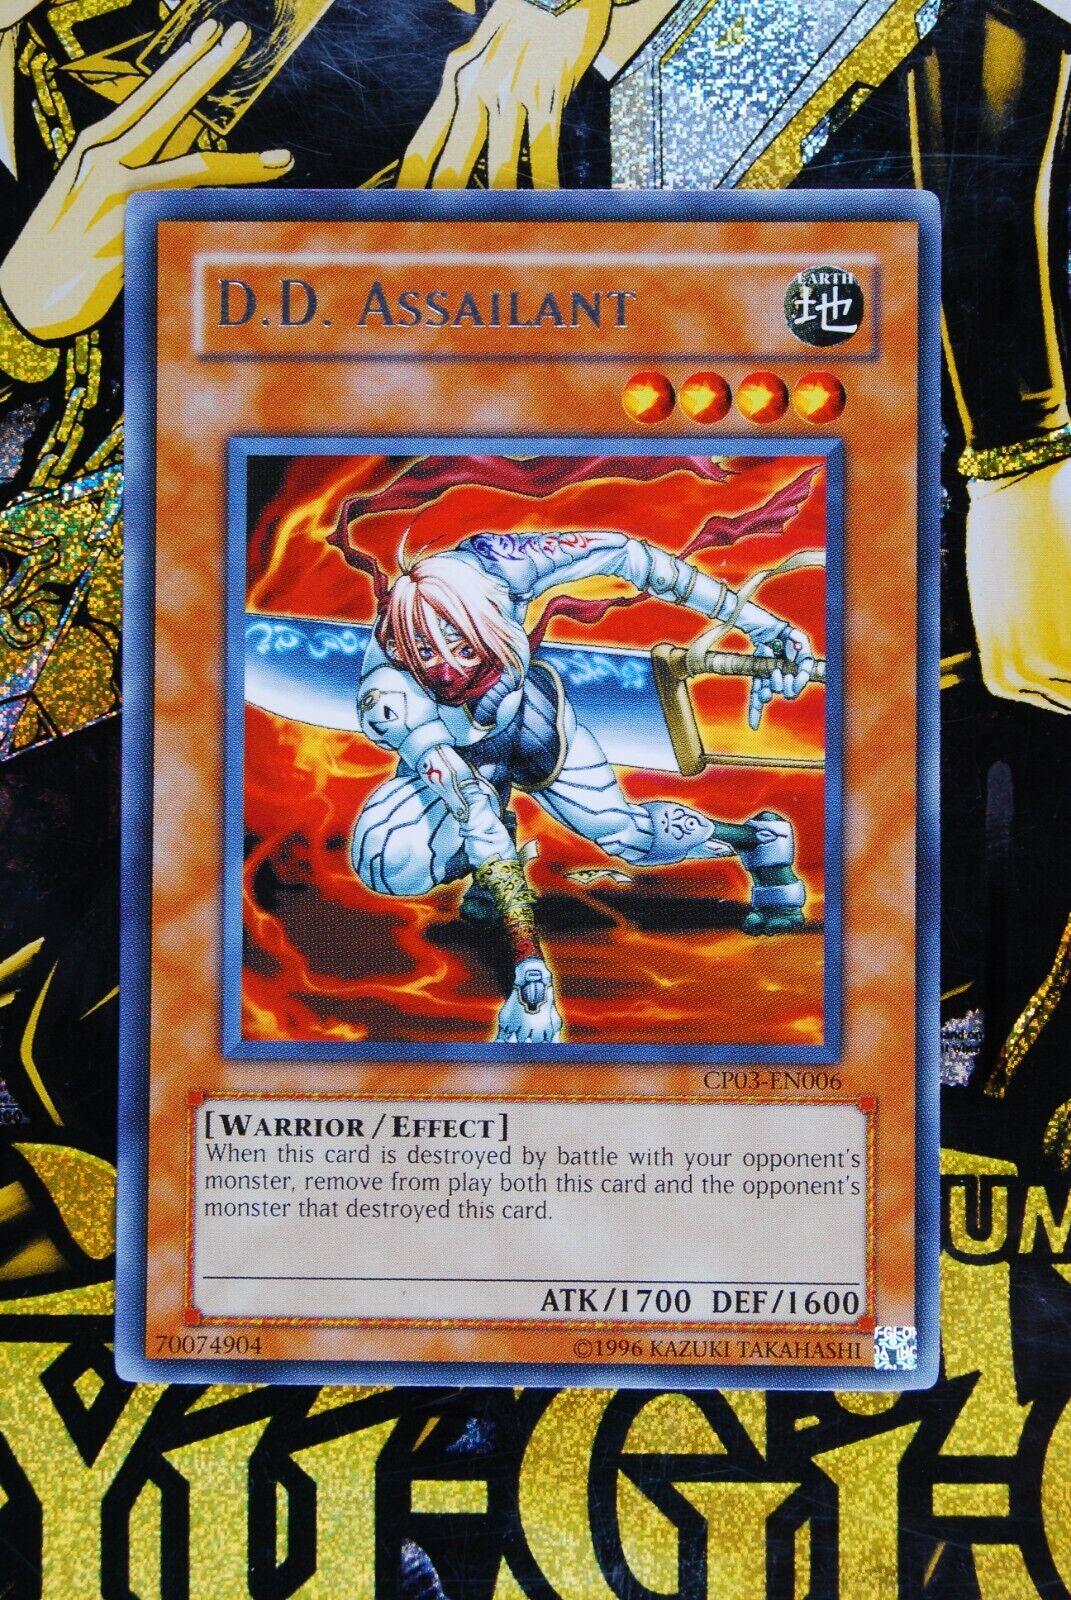 D.D. Assailant CP03-EN006 Rare Yugioh Card Champion Pack Game 3